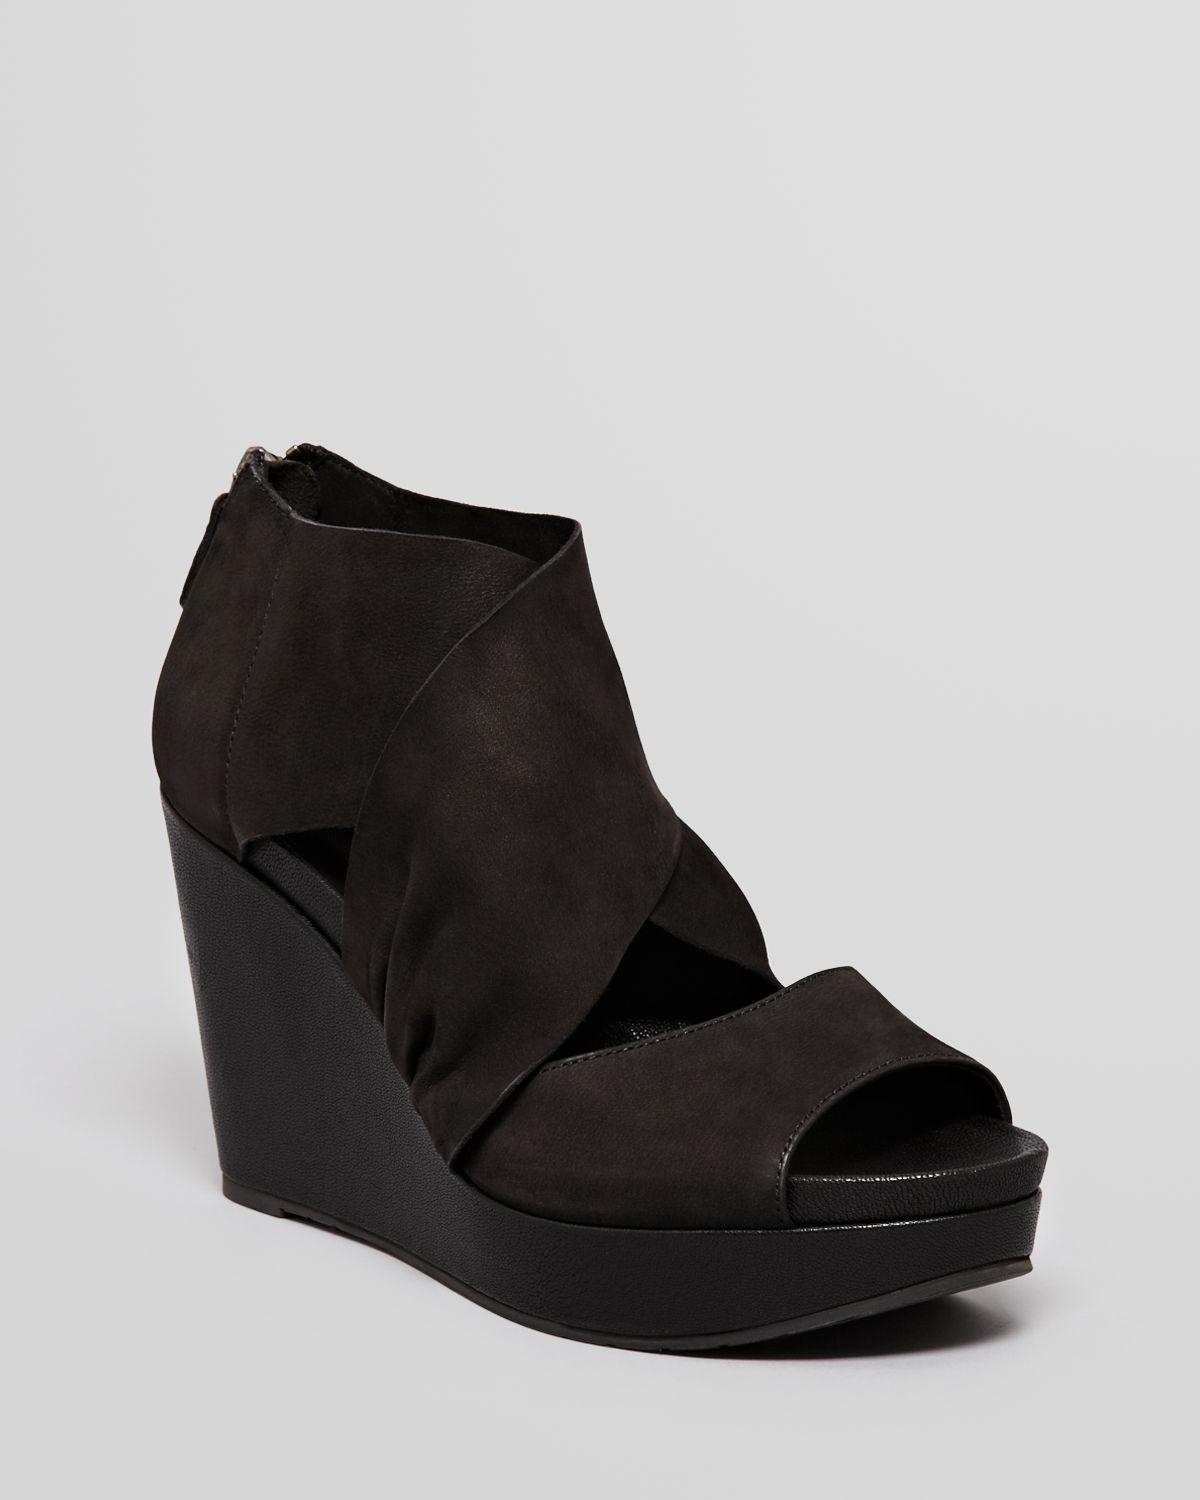 Lyst - Eileen Fisher Open Toe Platform Wedge Sandals Draw in Black